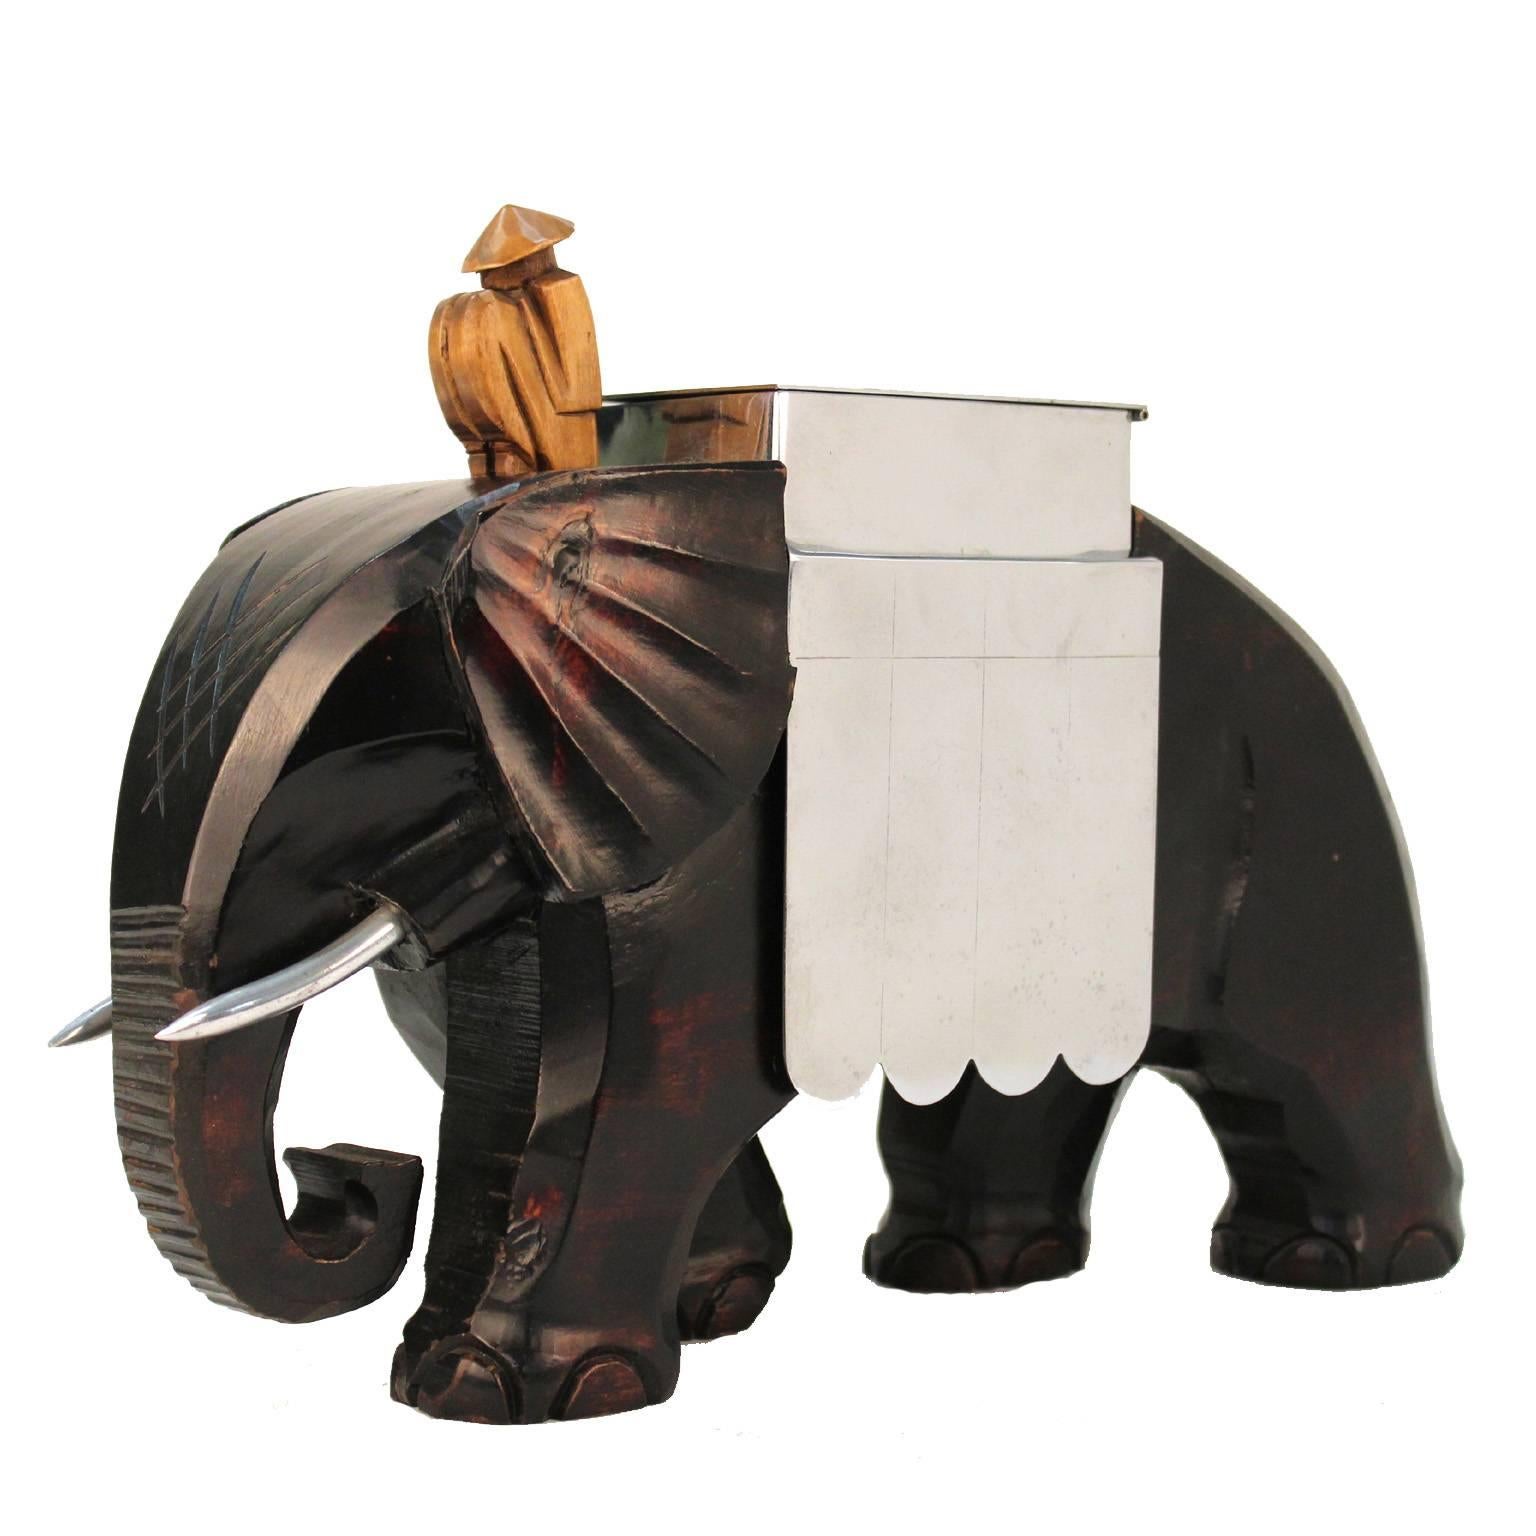 French Art Deco Elephant-Shaped Humidor Vessel